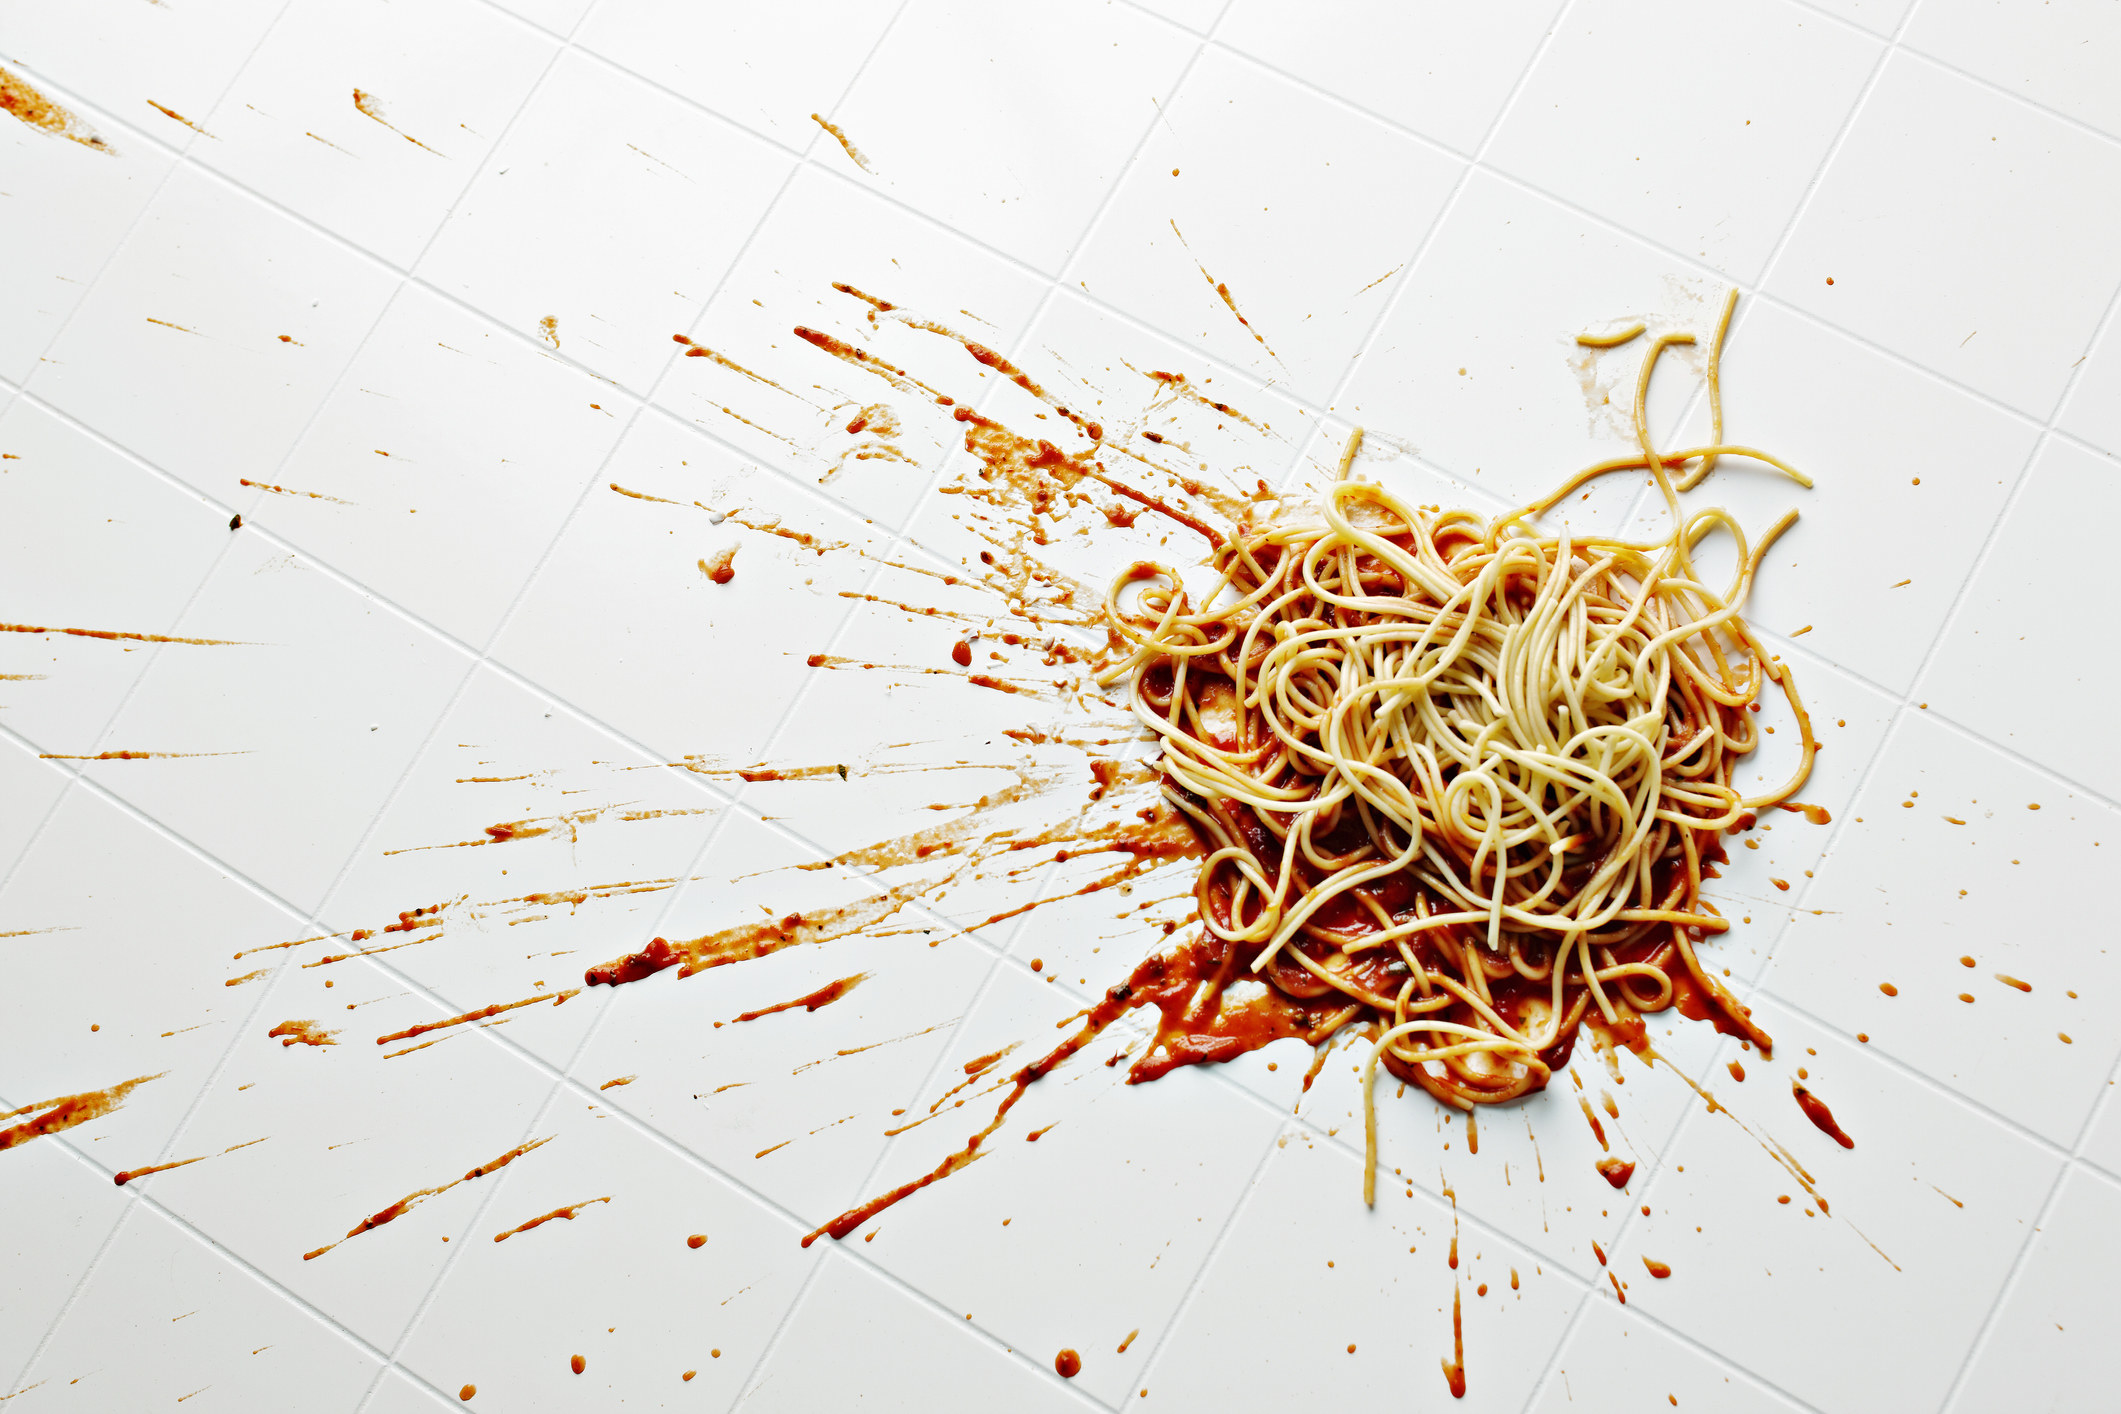 spaghetti spilled on ground